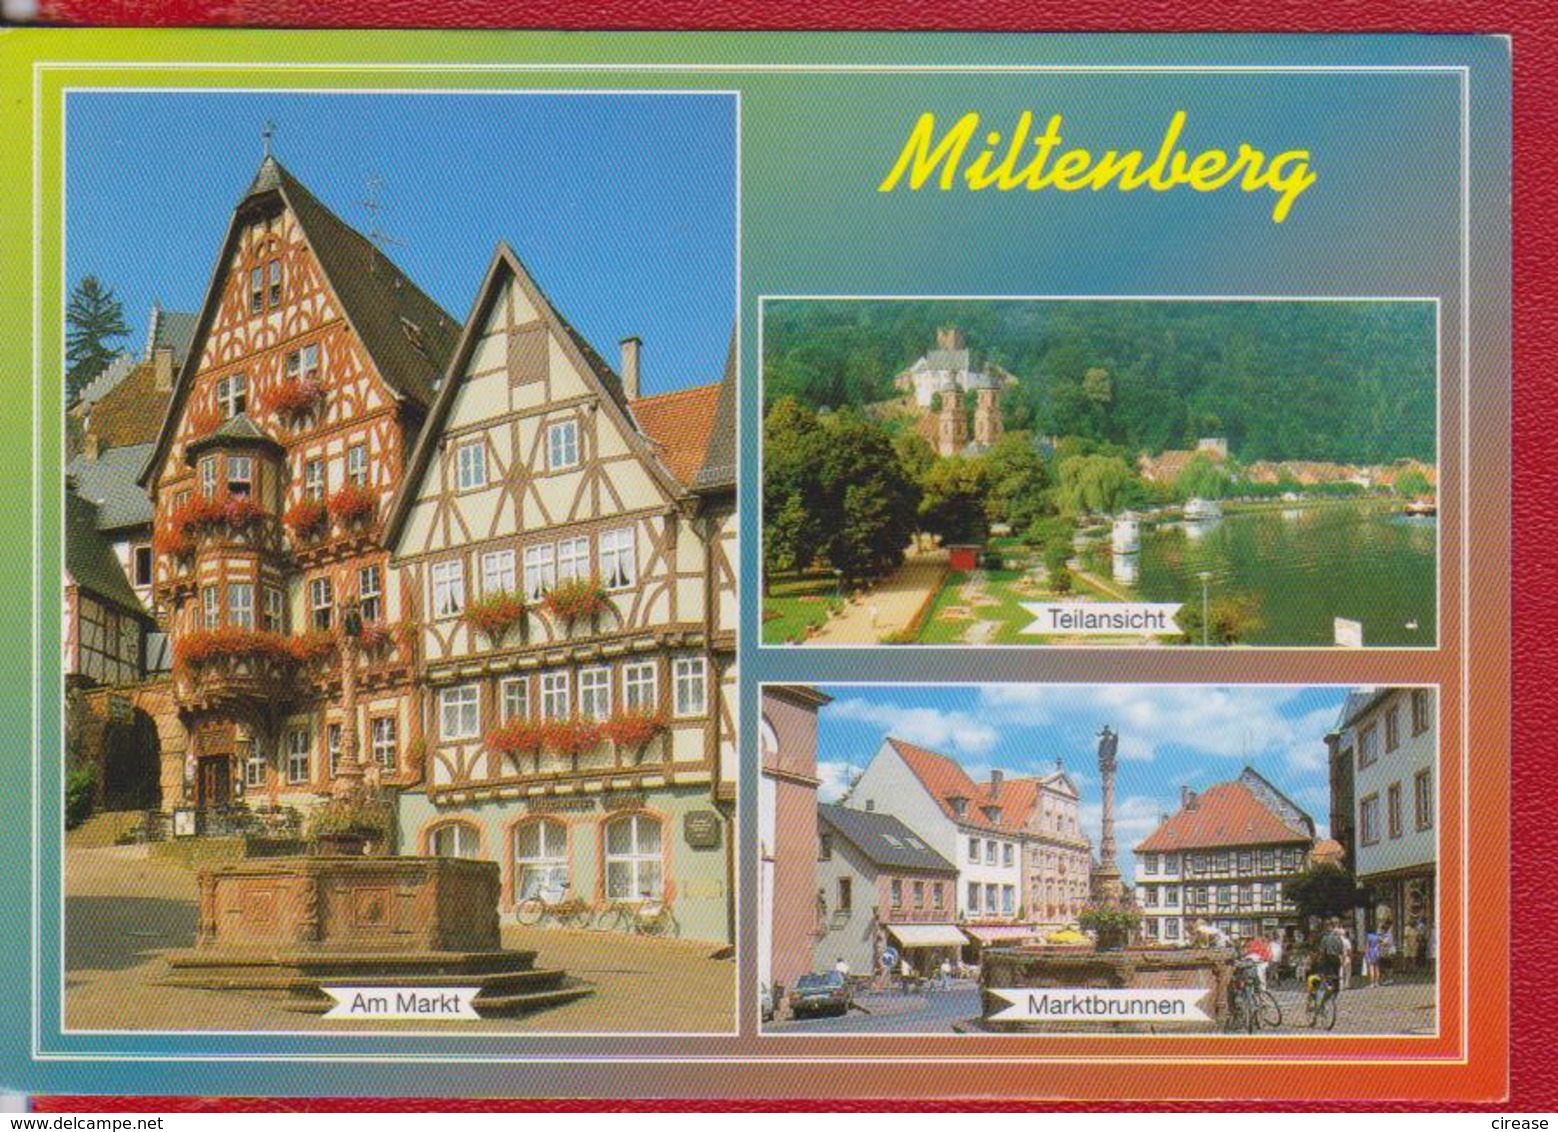 MILTENBERG GERMANY POSTCARD UNUSED - Miltenberg A. Main